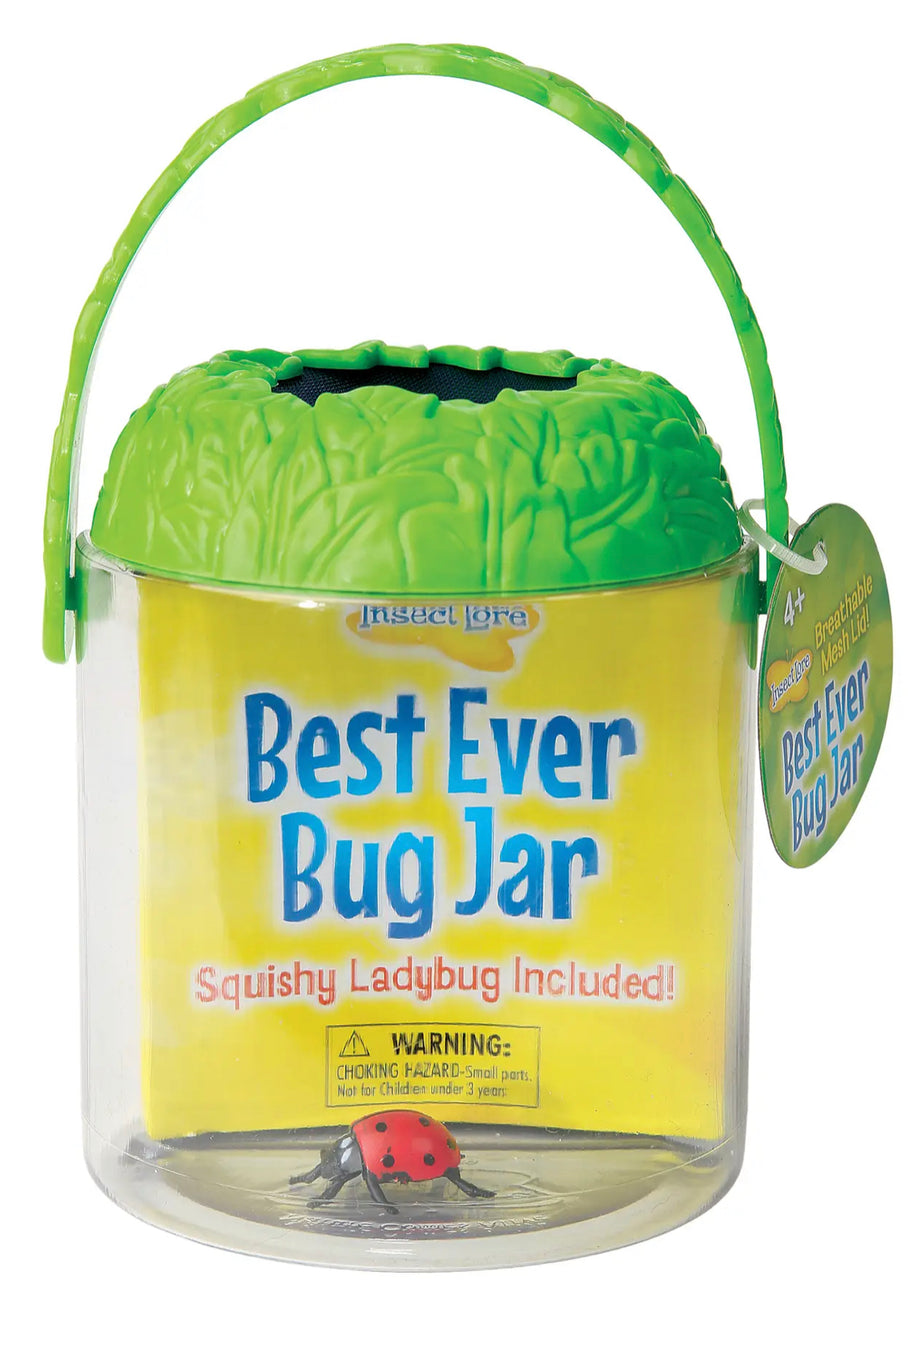 InsectLore Best Ever Bug Jar – Mamas Got Heart